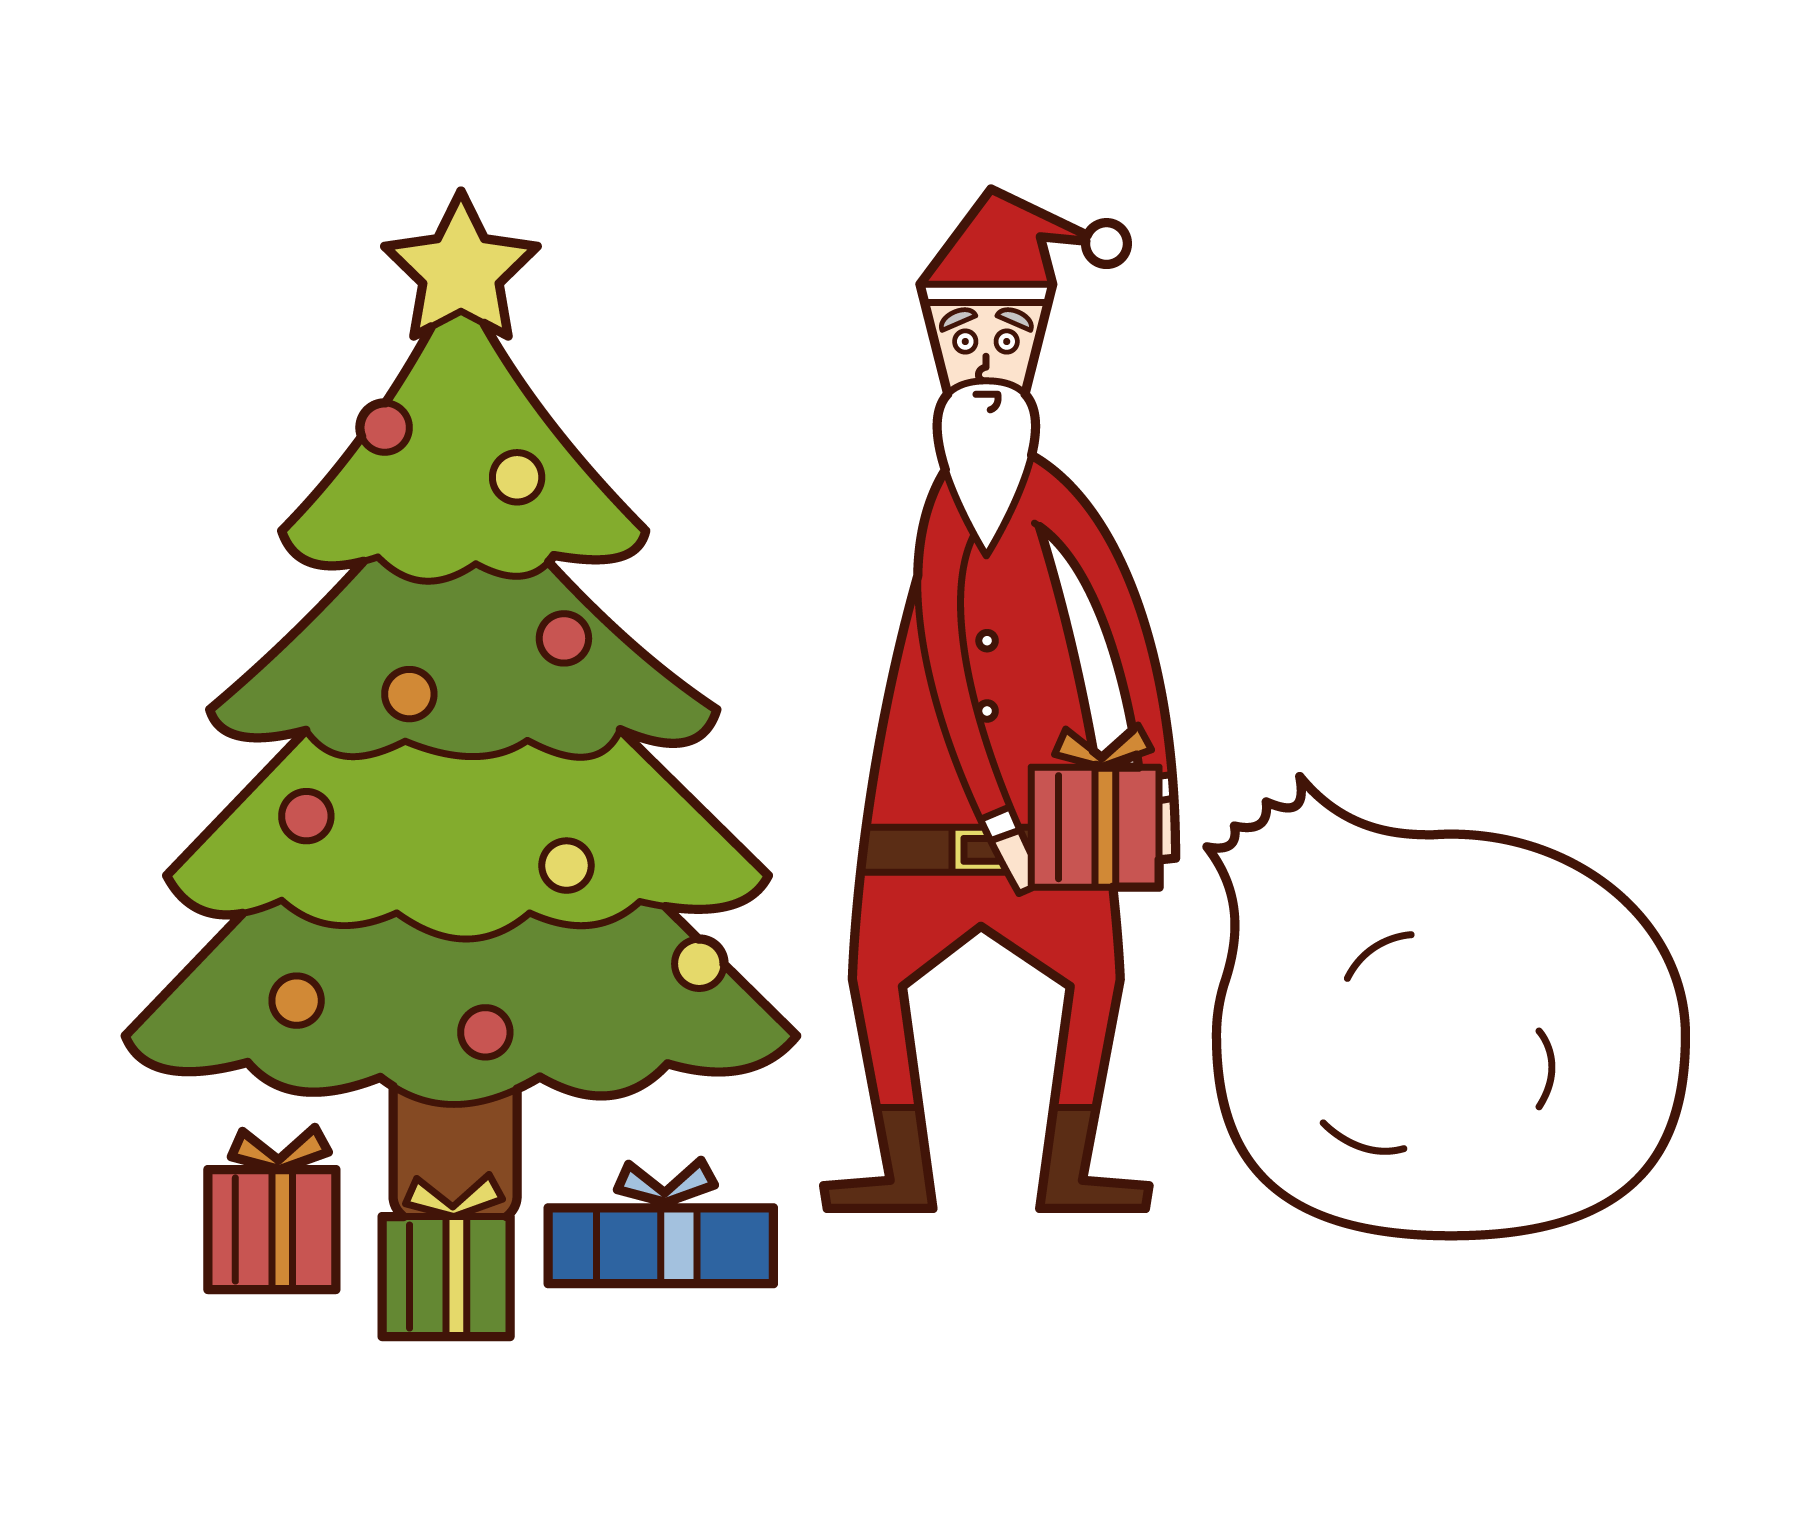 Illustration of Santa Claus (man) arranging presents under a Christmas tree